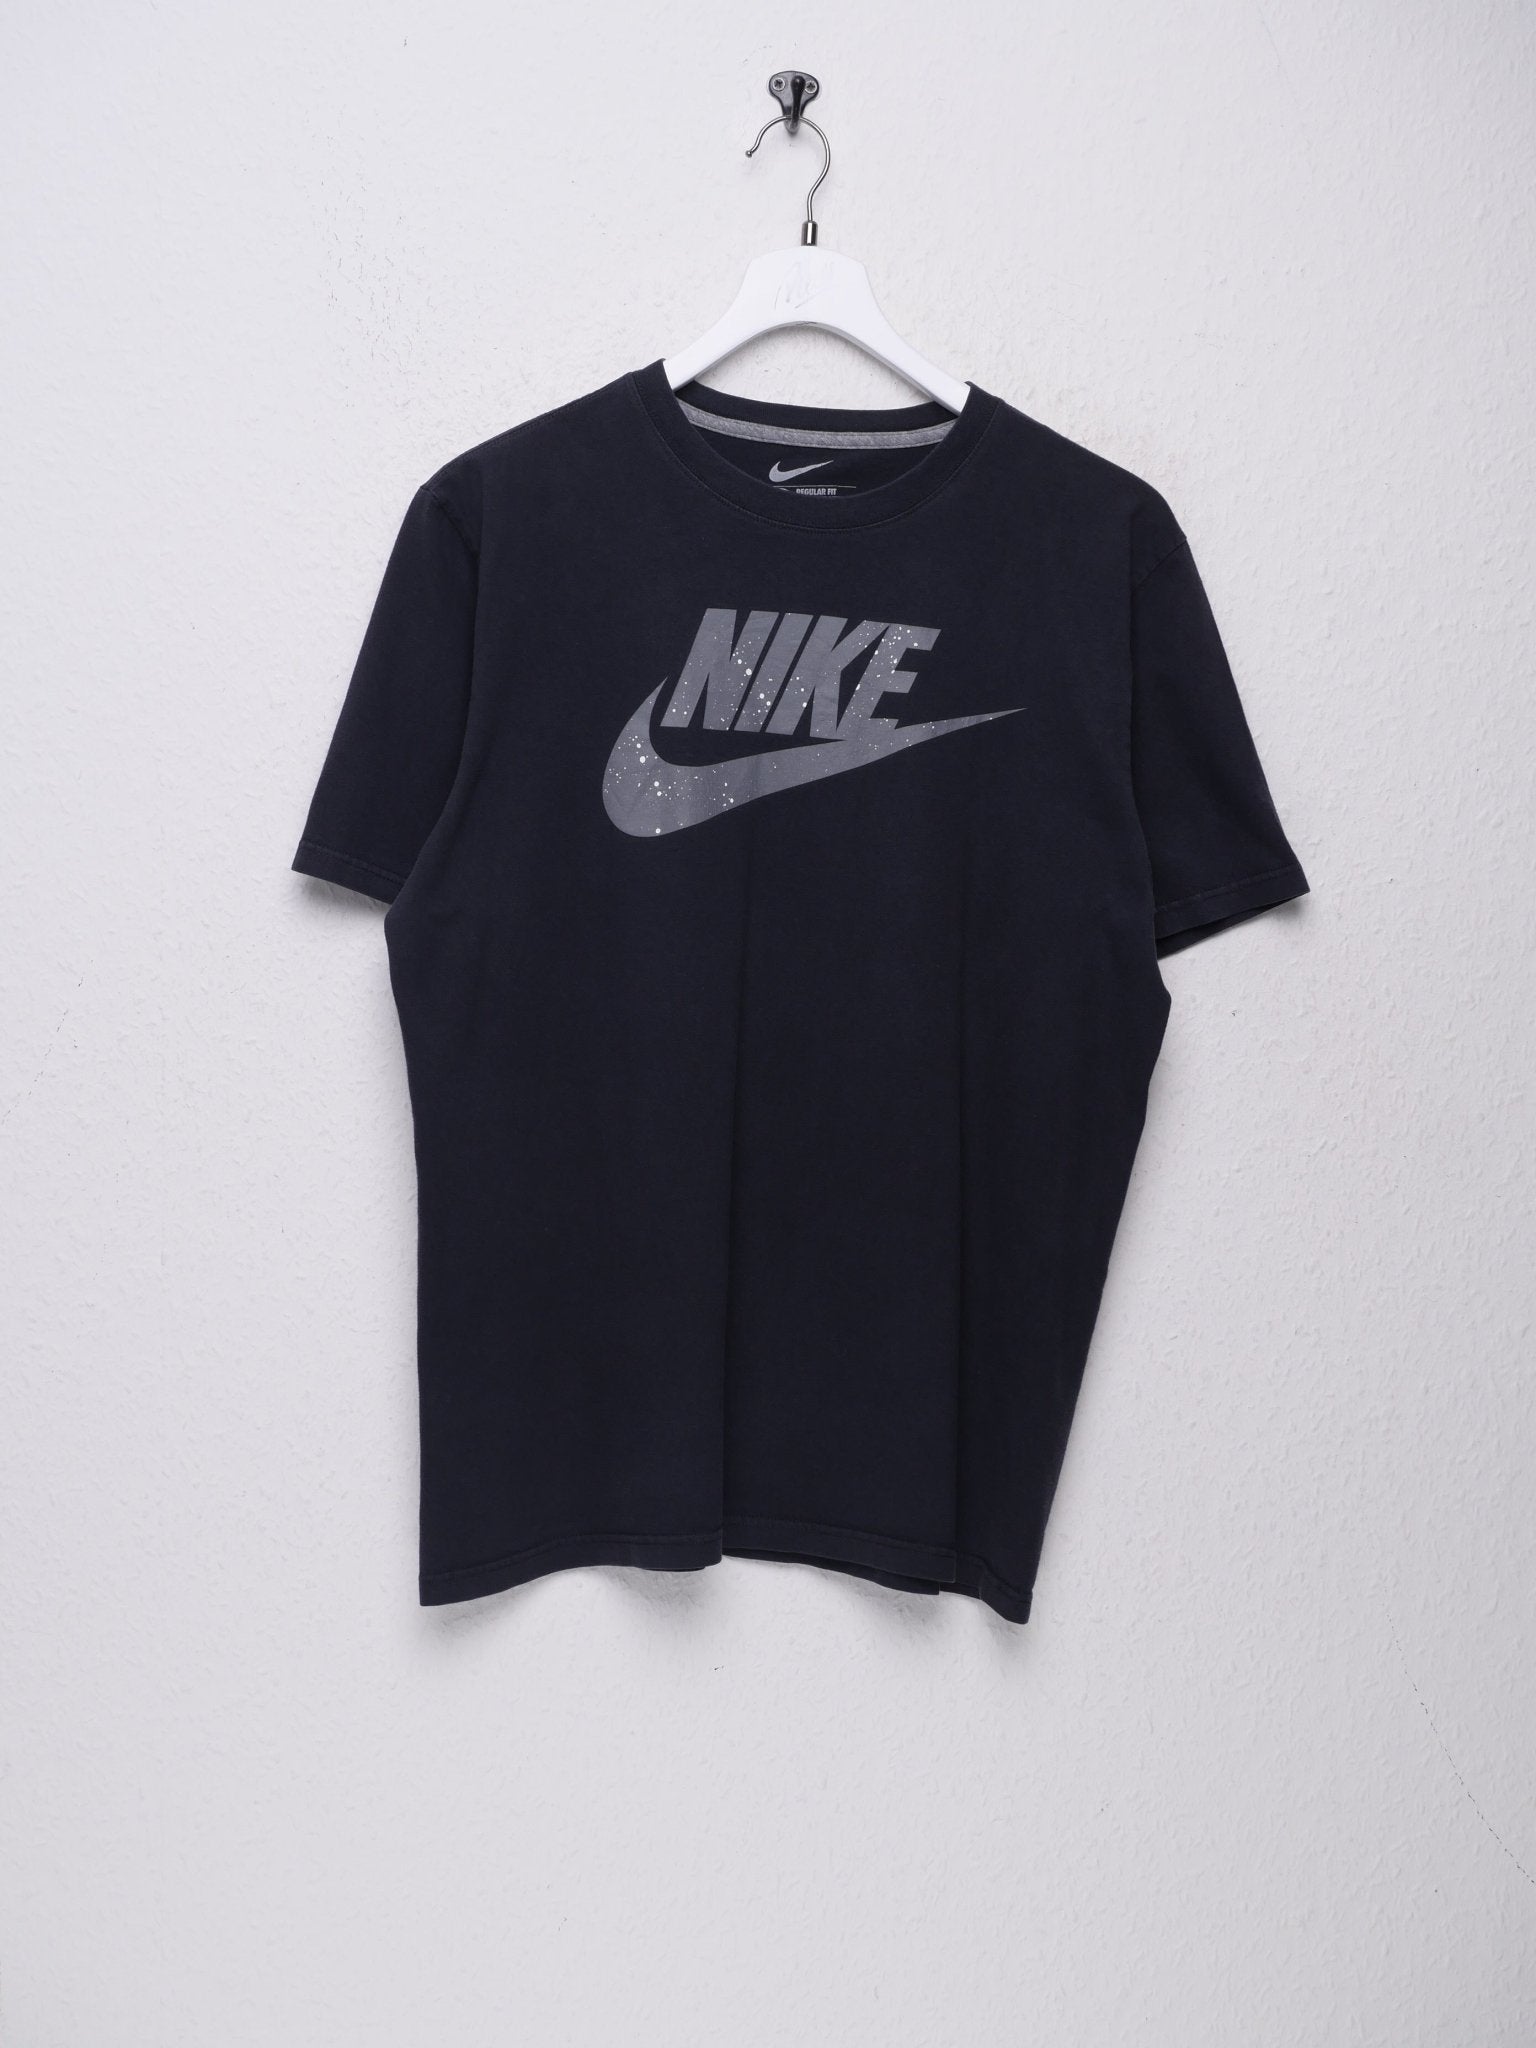 Nike printed Logo washed black Shirt - Peeces